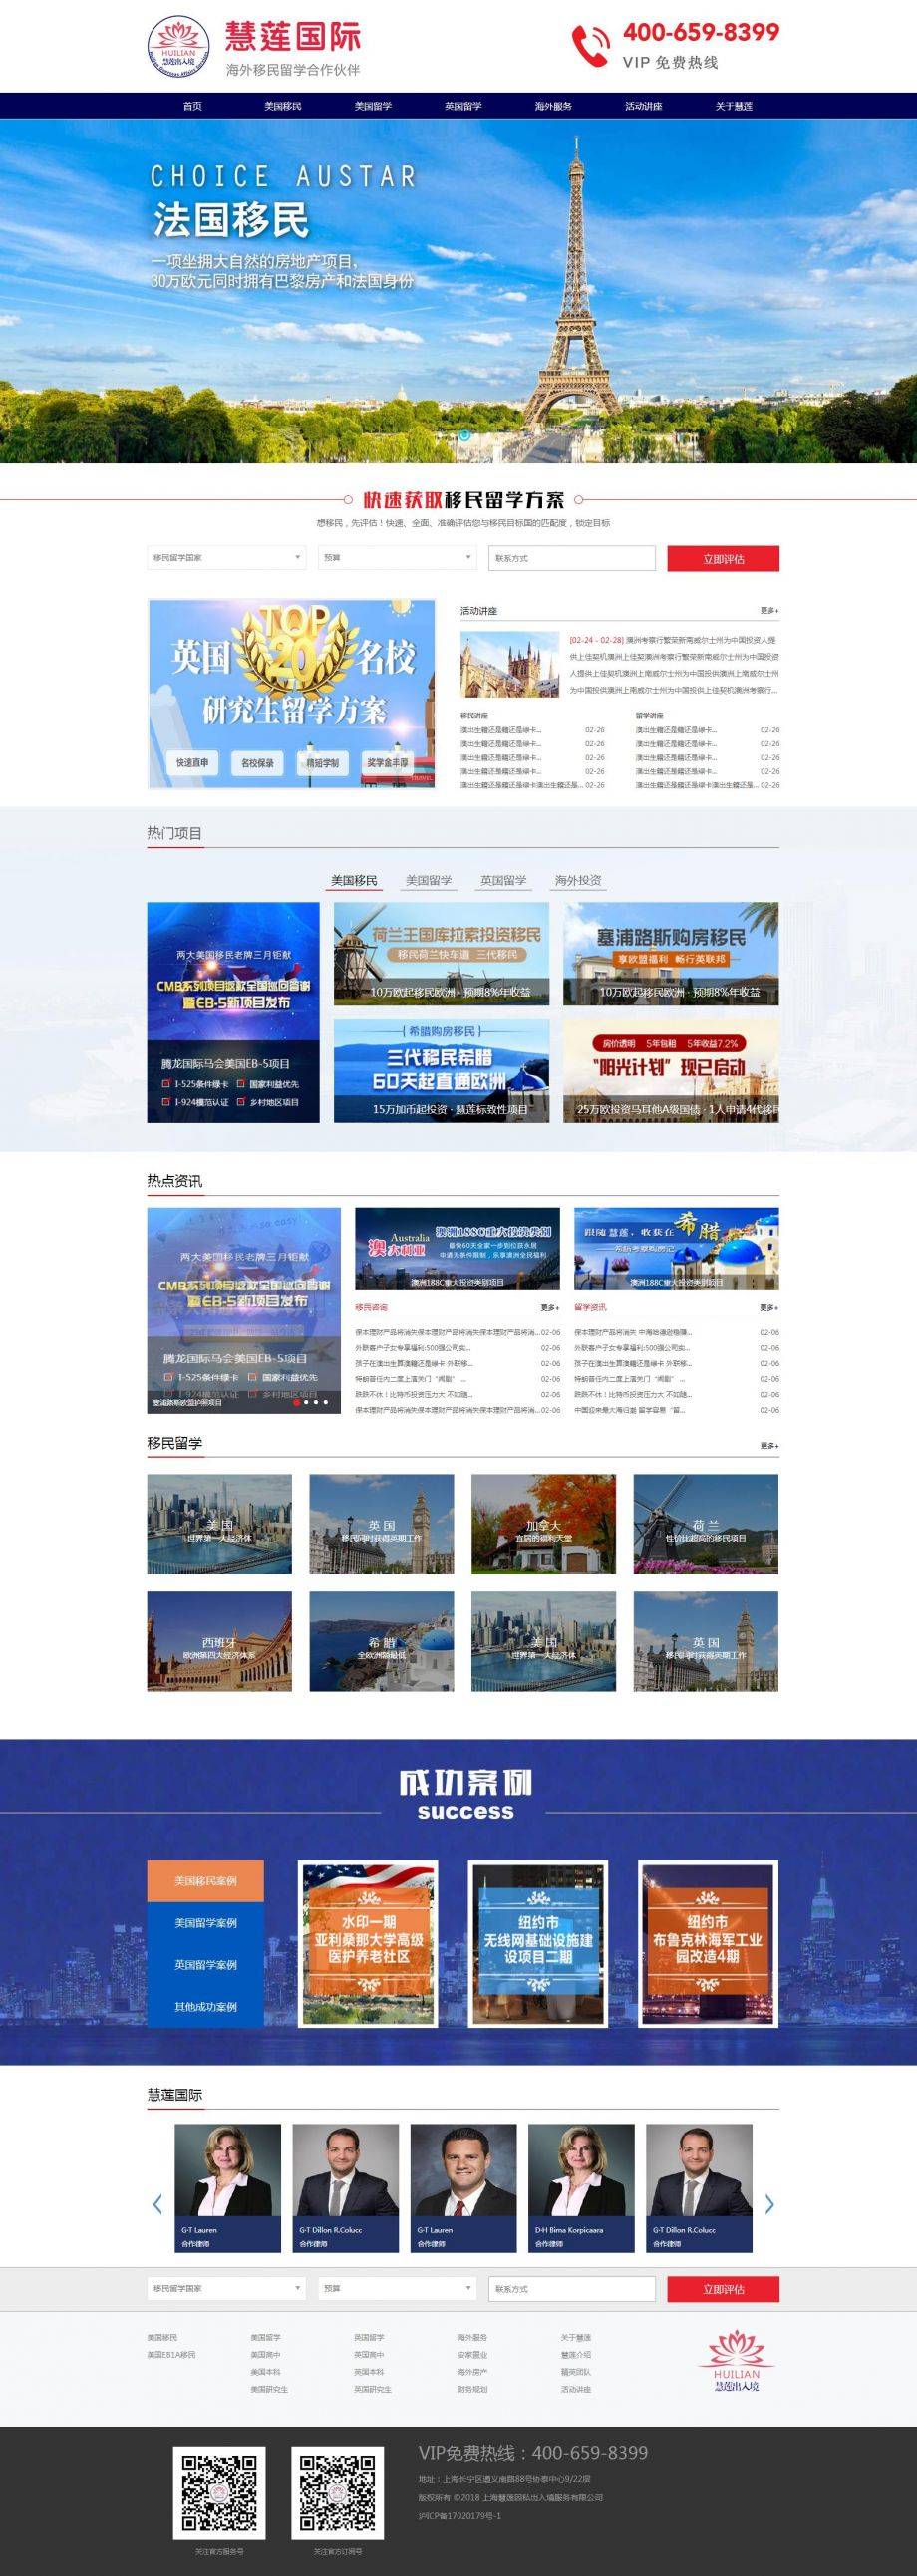 H5办理海外综合事务慧莲国际企业网站模板